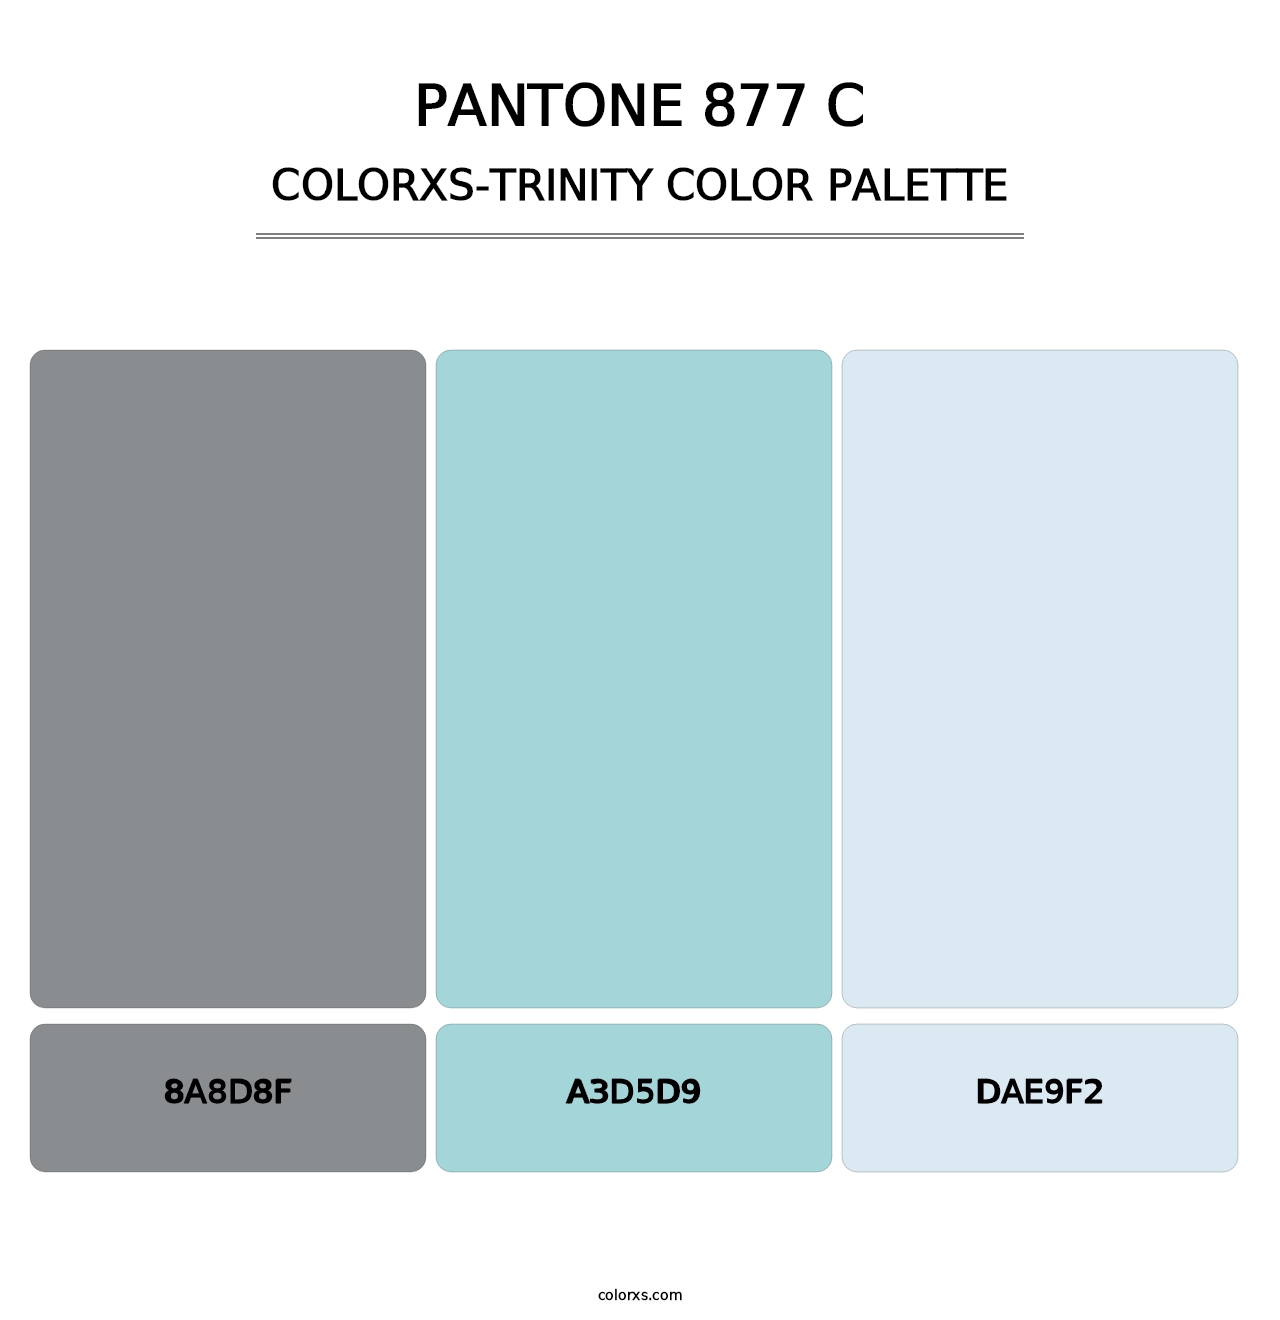 PANTONE 877 C - Colorxs Trinity Palette